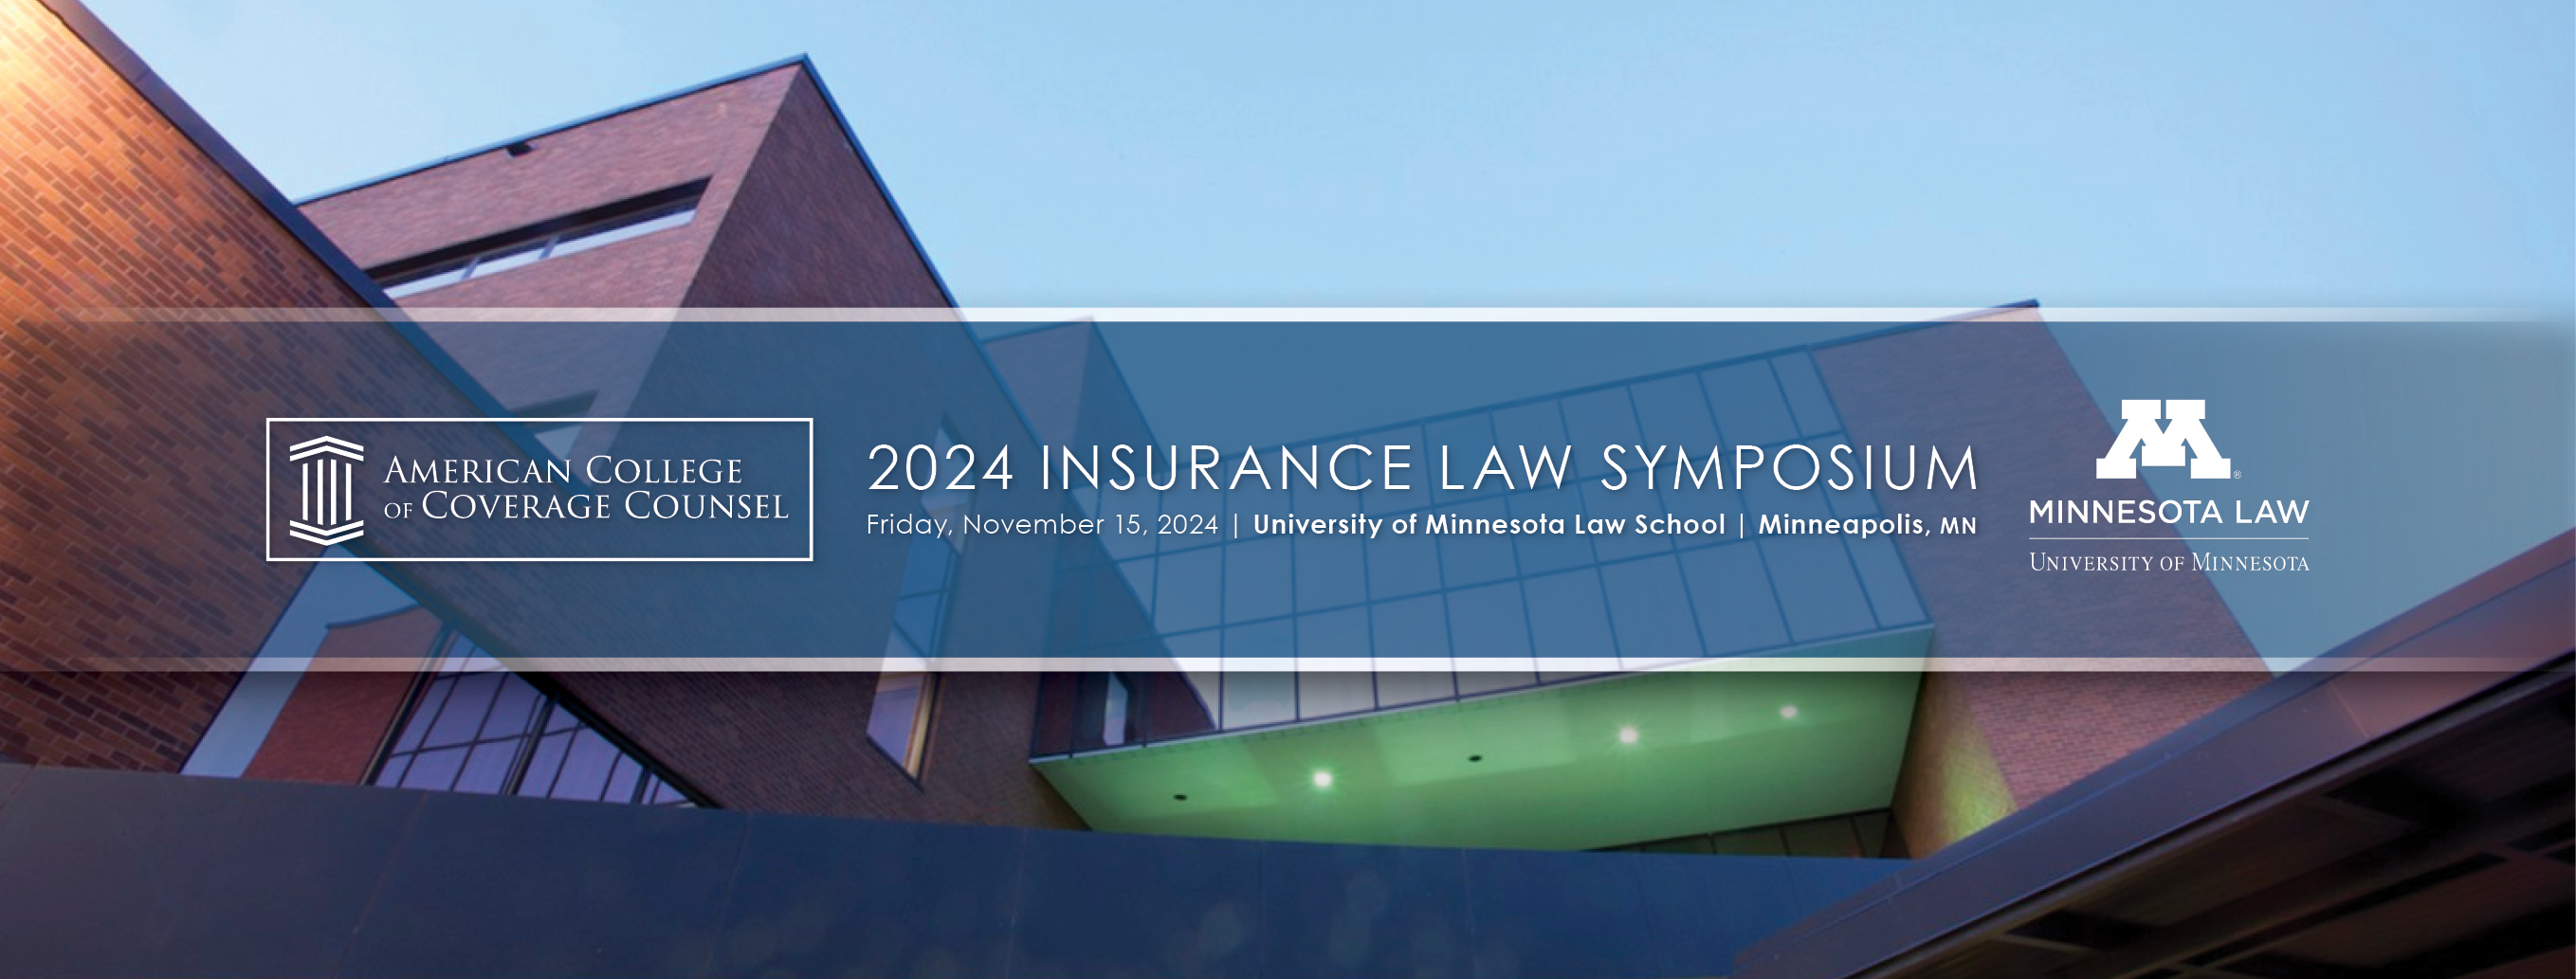 2024 Insurance Law Symposium